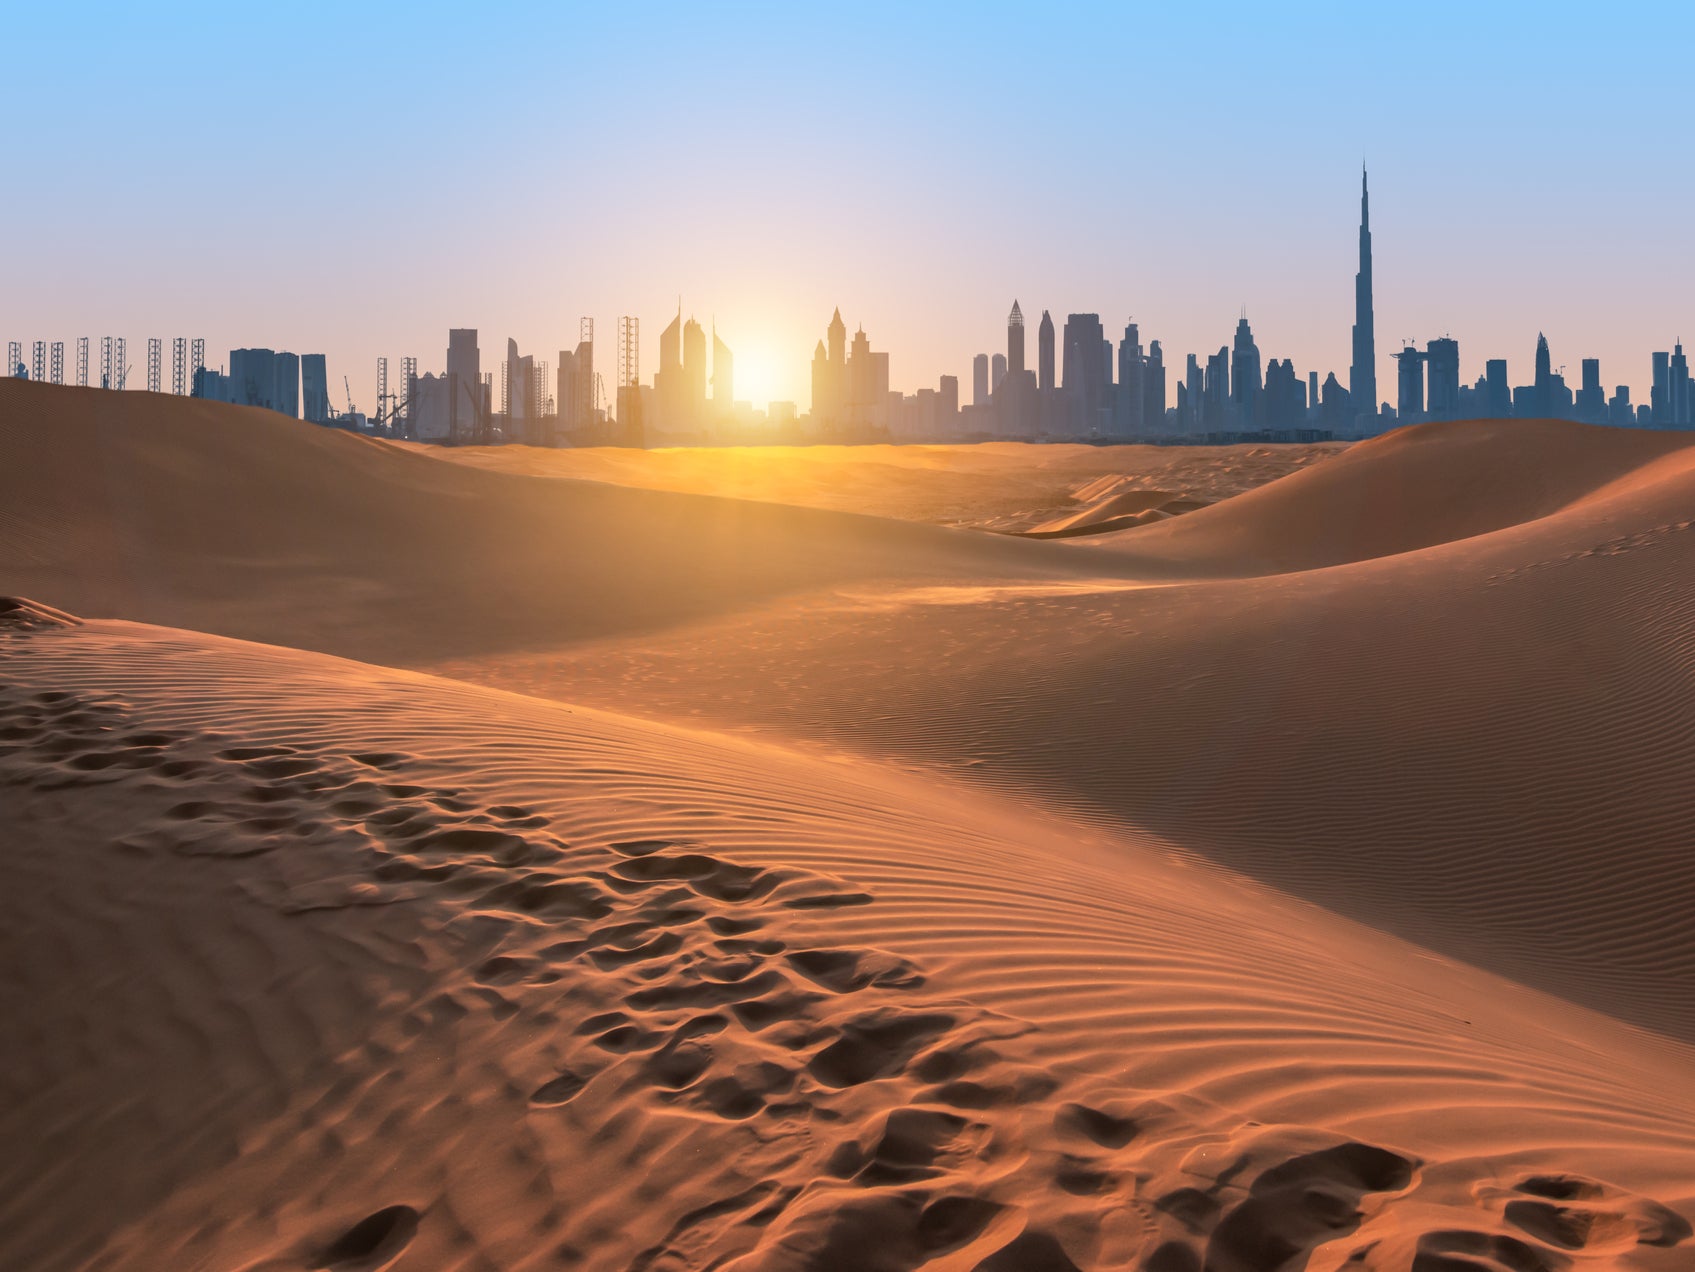 Dubai’s relentless growth is a threat to the area’s desert habitat